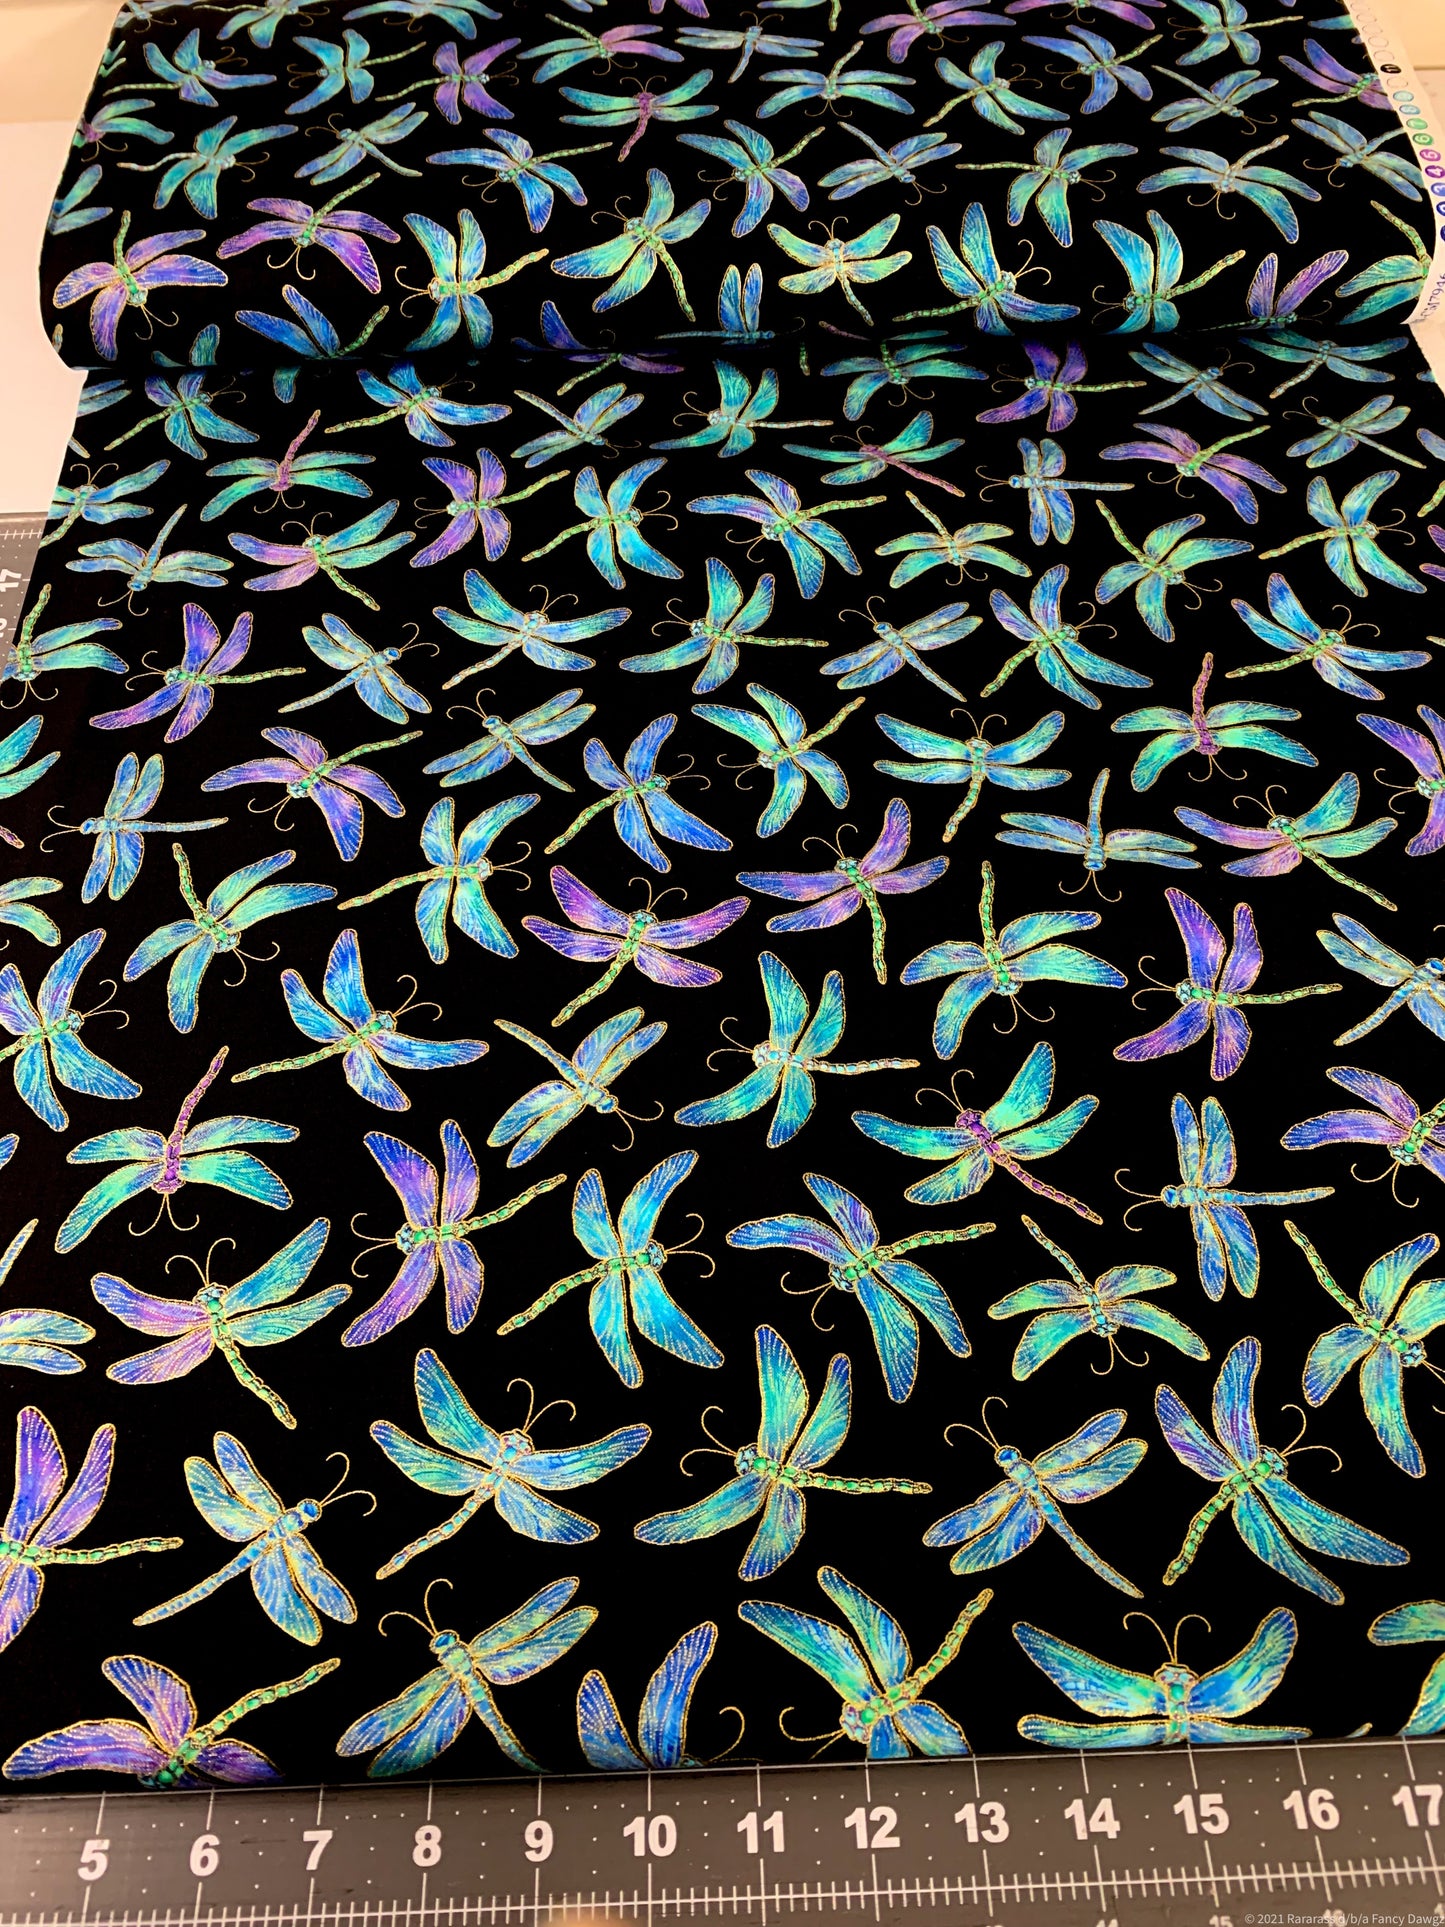 Blue dragonfly fabric CM7946 Dragonflies